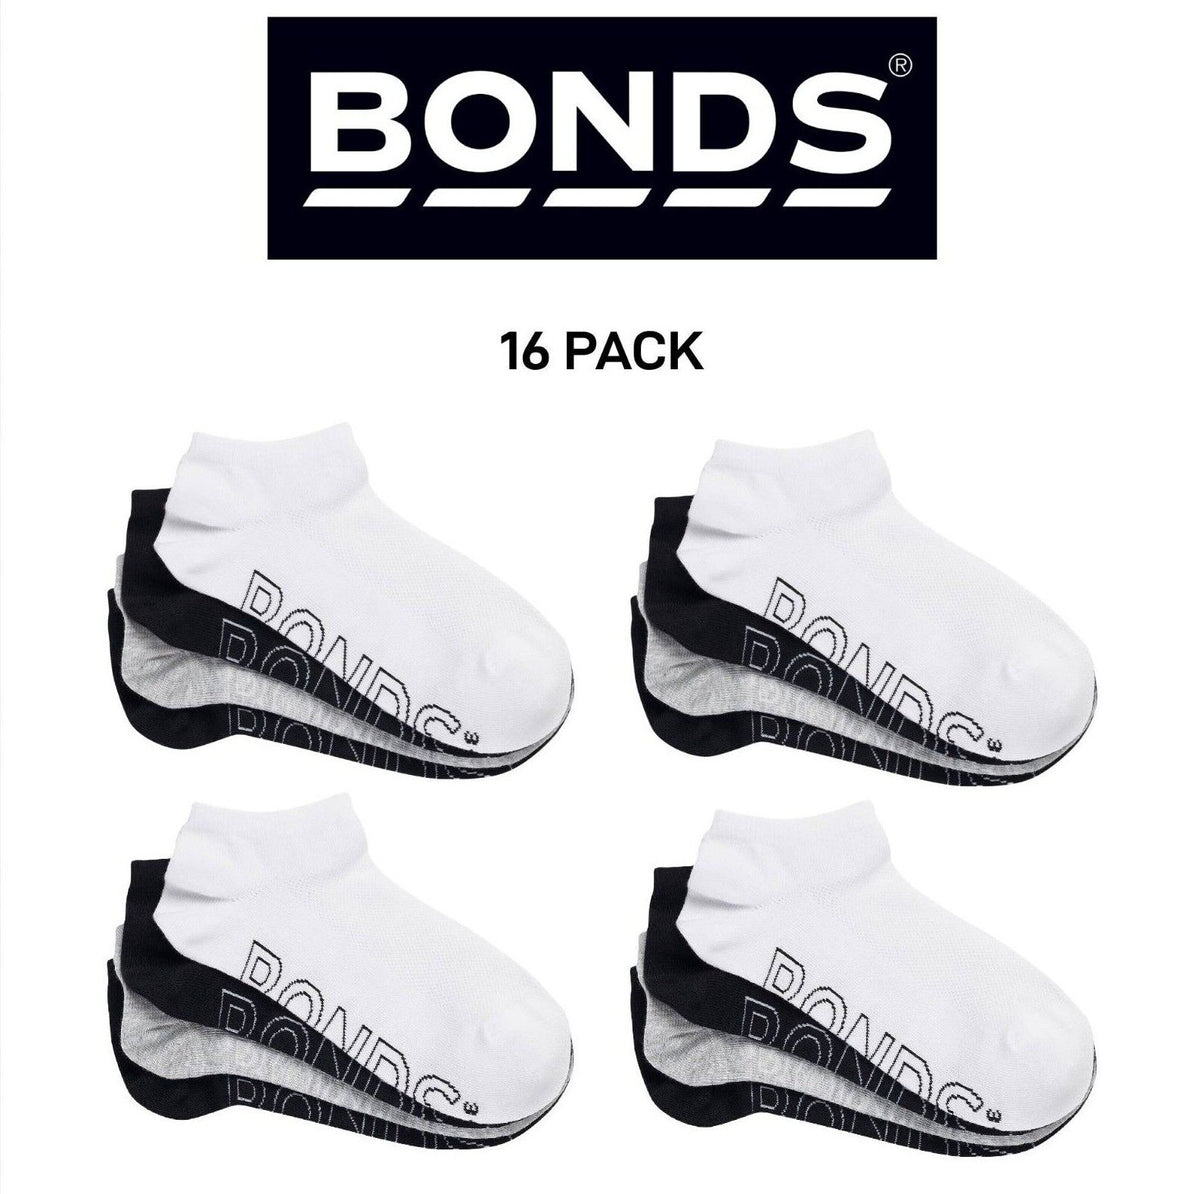 Bonds Womens Lightweight Low Cut Smooth Comfy Stay-Put Fit Socks 16 Pack LXPV4N